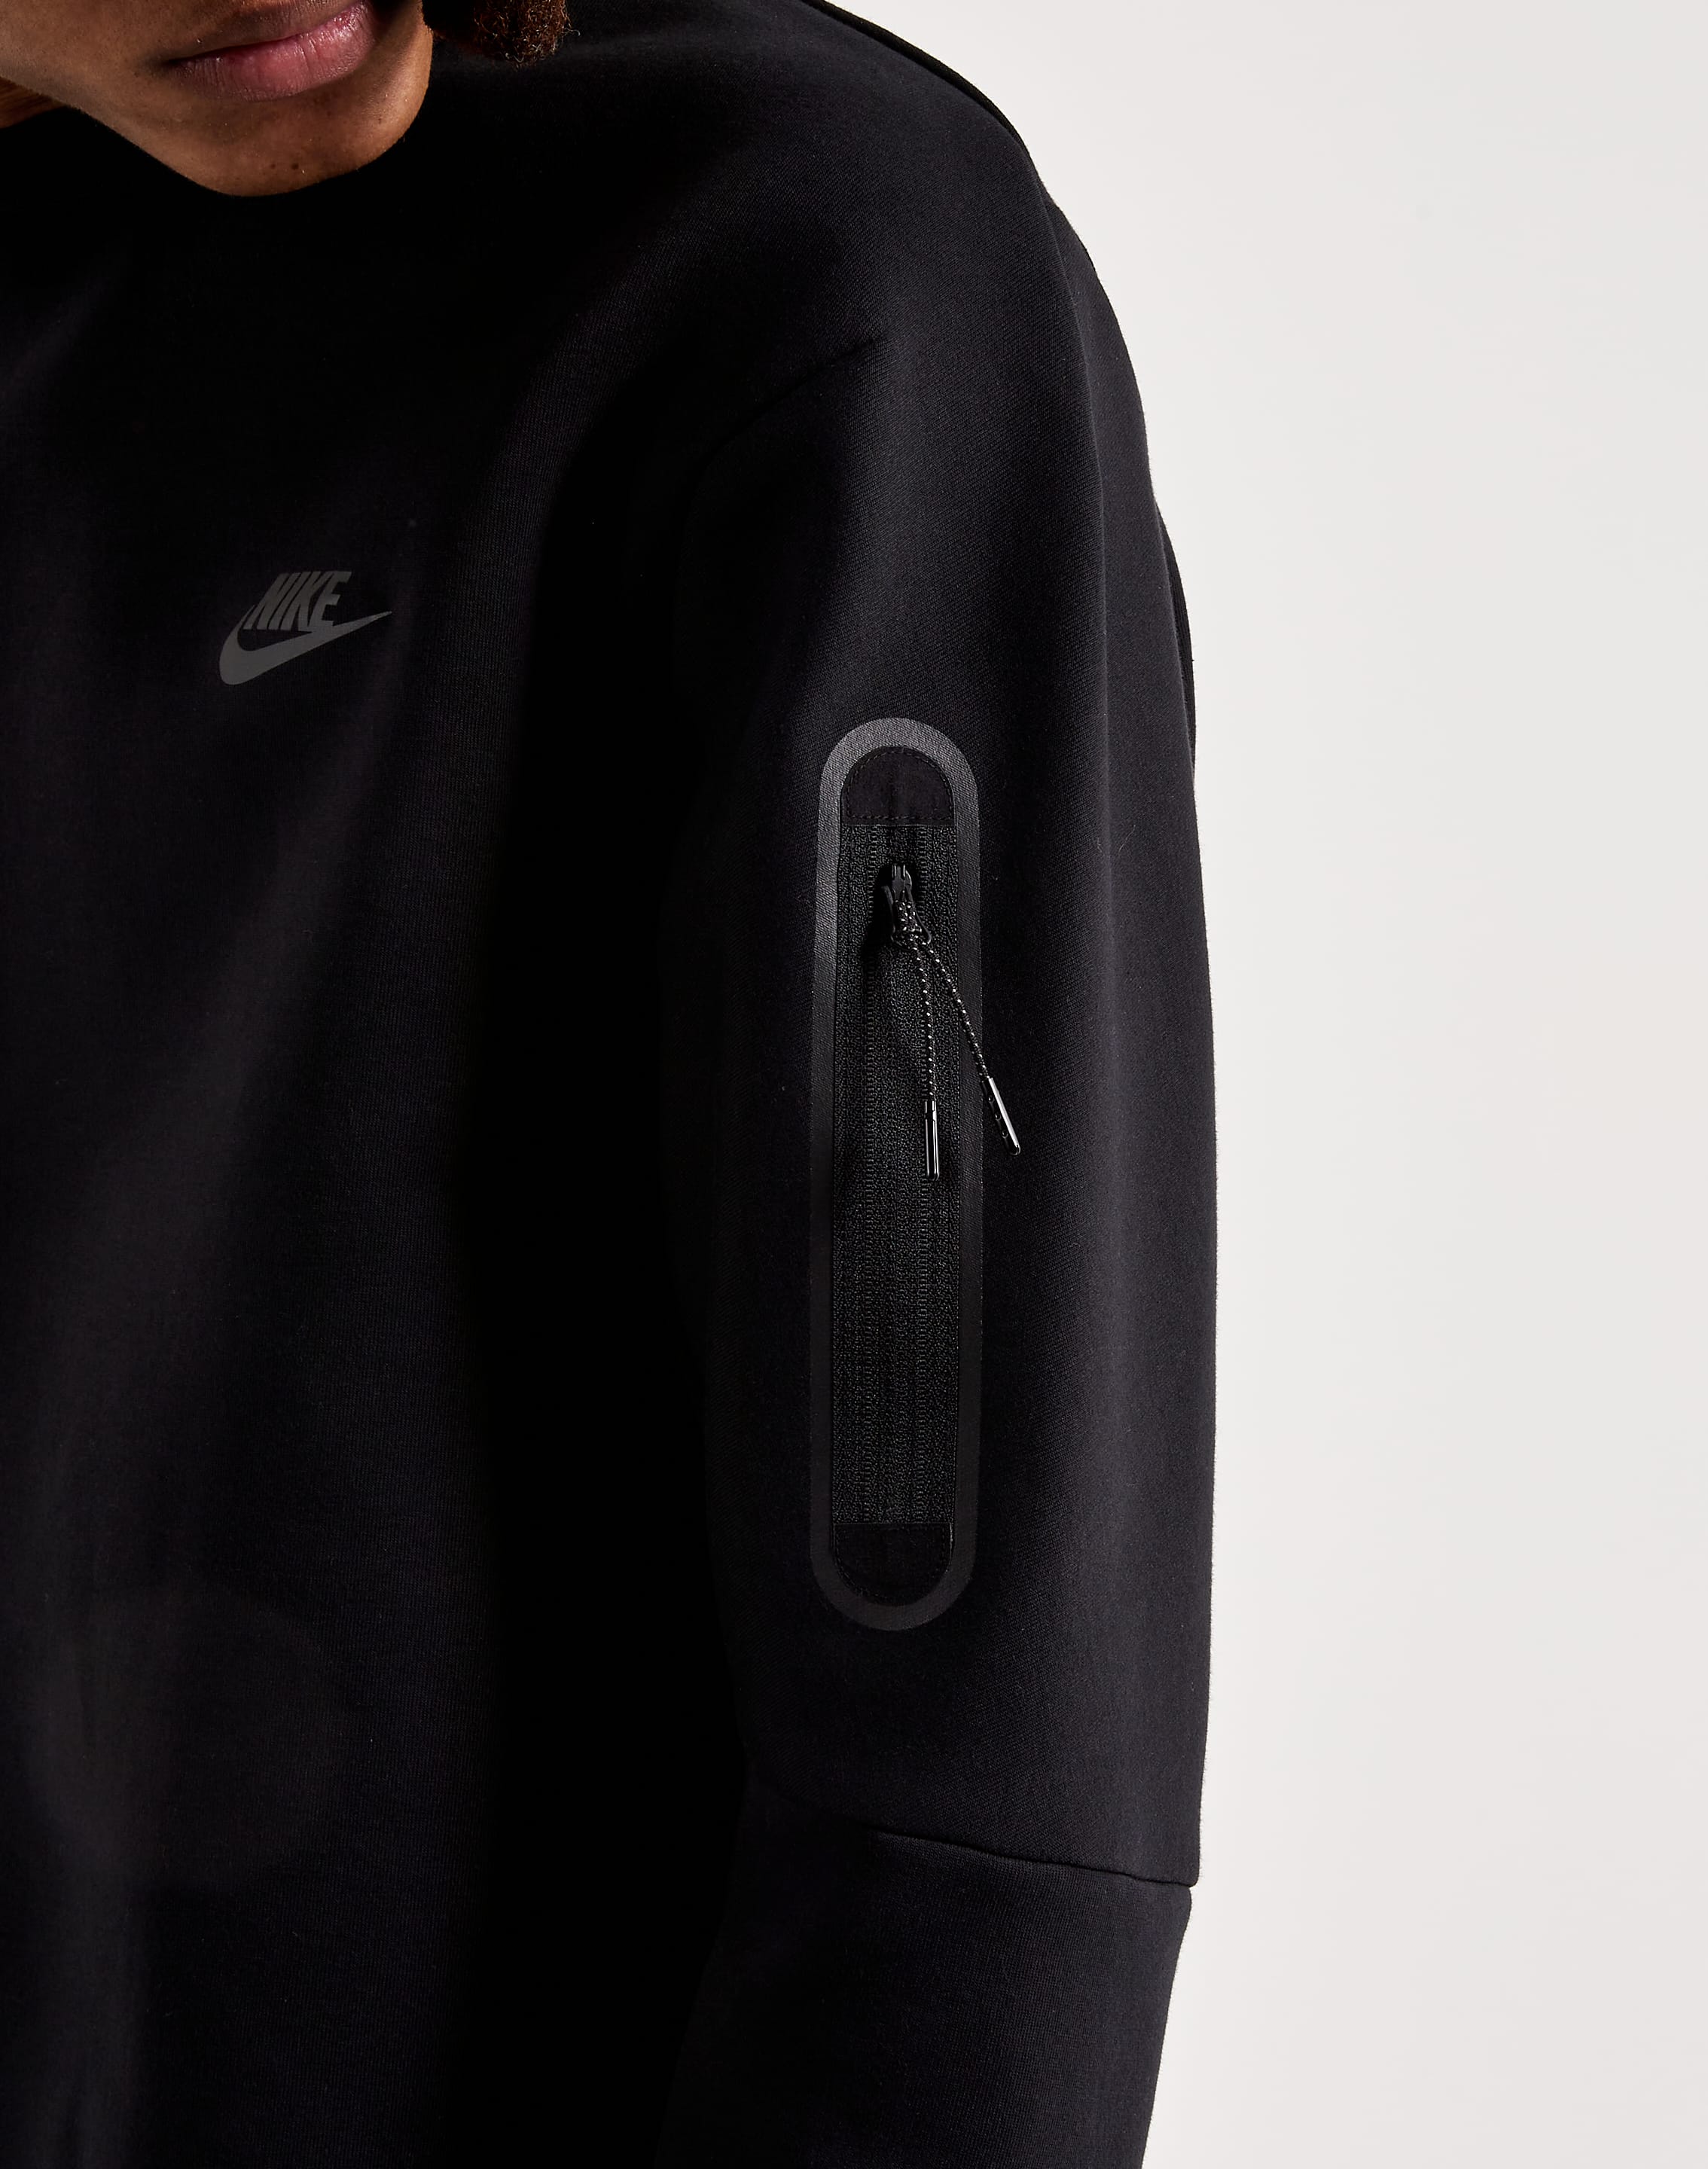 Nike Tech – DTLR